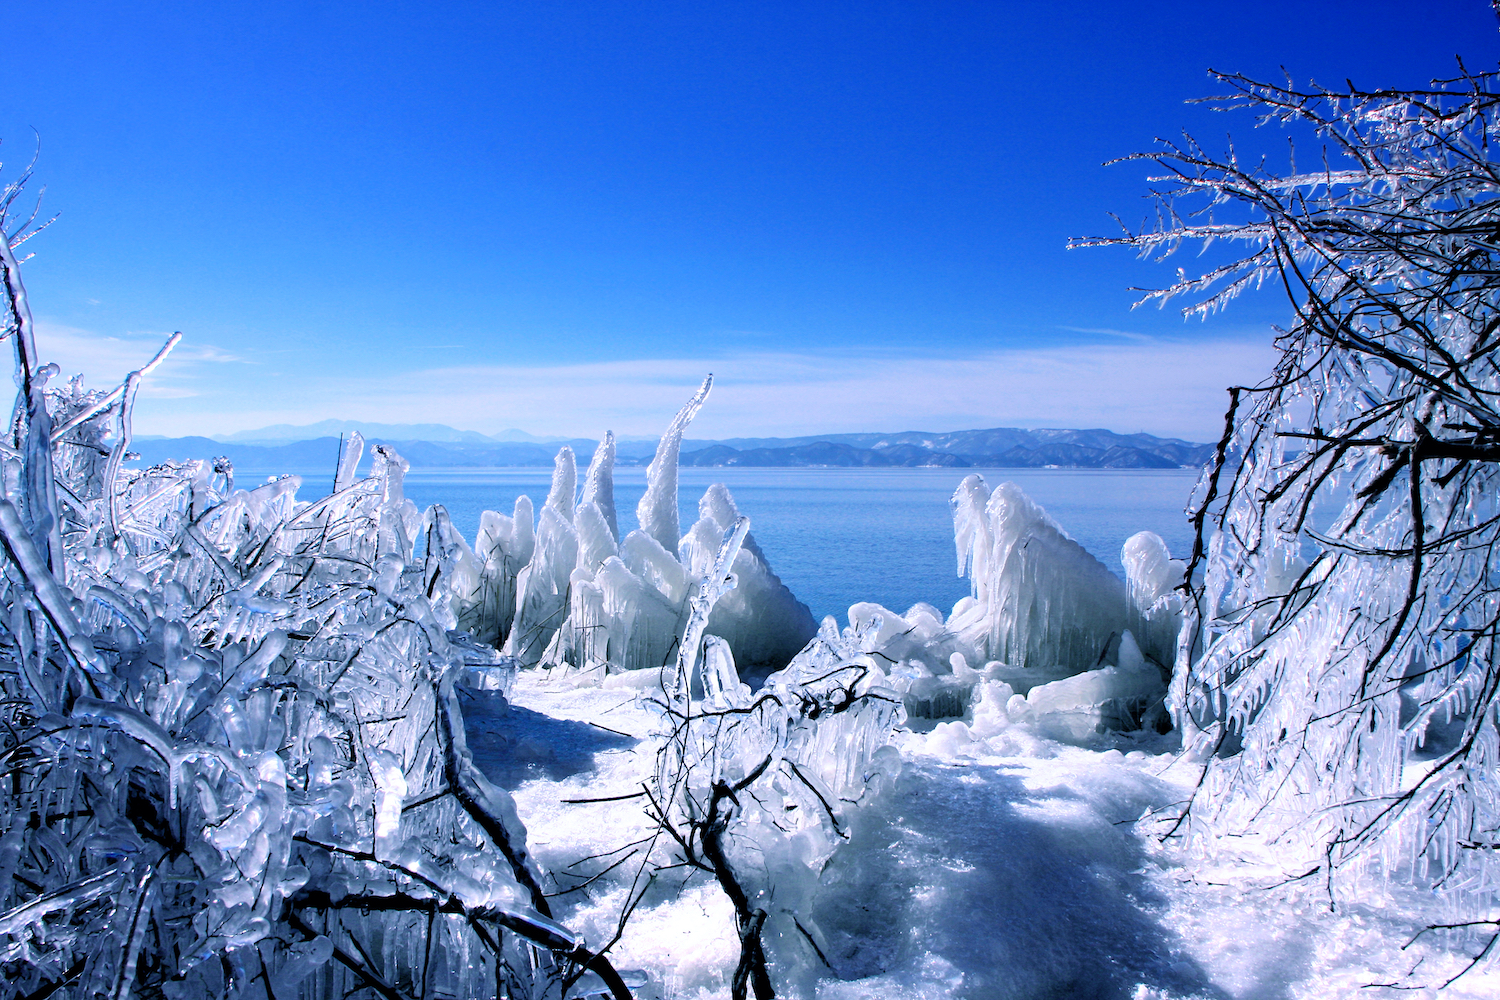 "It is Lake Inawashiro and Mount Bandai" beautiful winter scenery of Fukushima. Lake spray makes “shibuki-gori”, ice spray over the trees in winter